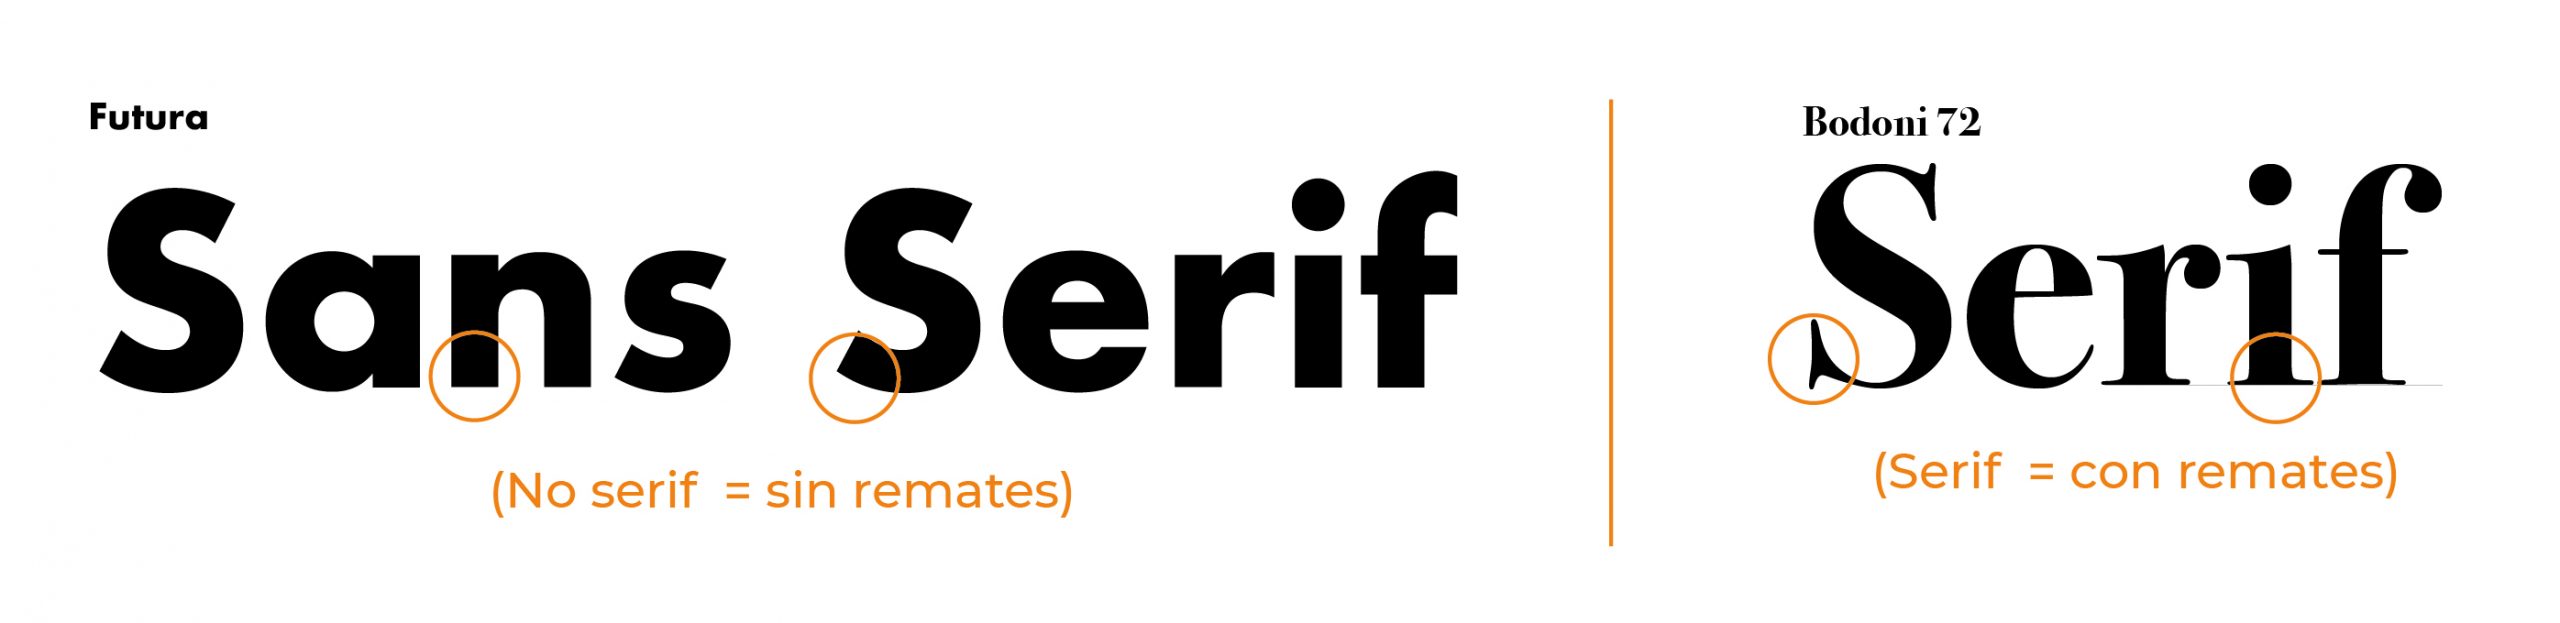 ejemplo-sansserif-serif